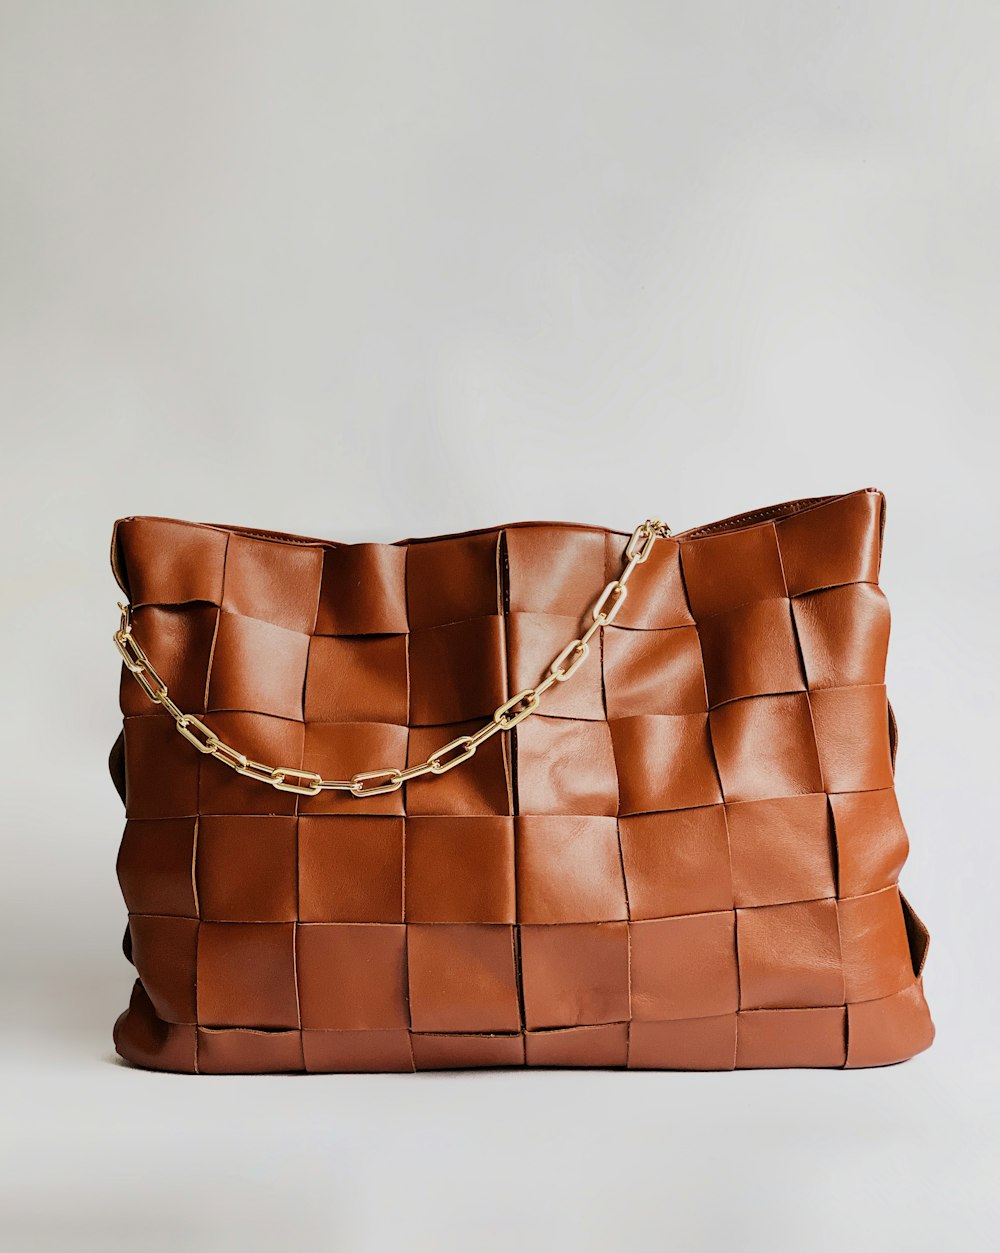 brown leather handbag on white surface